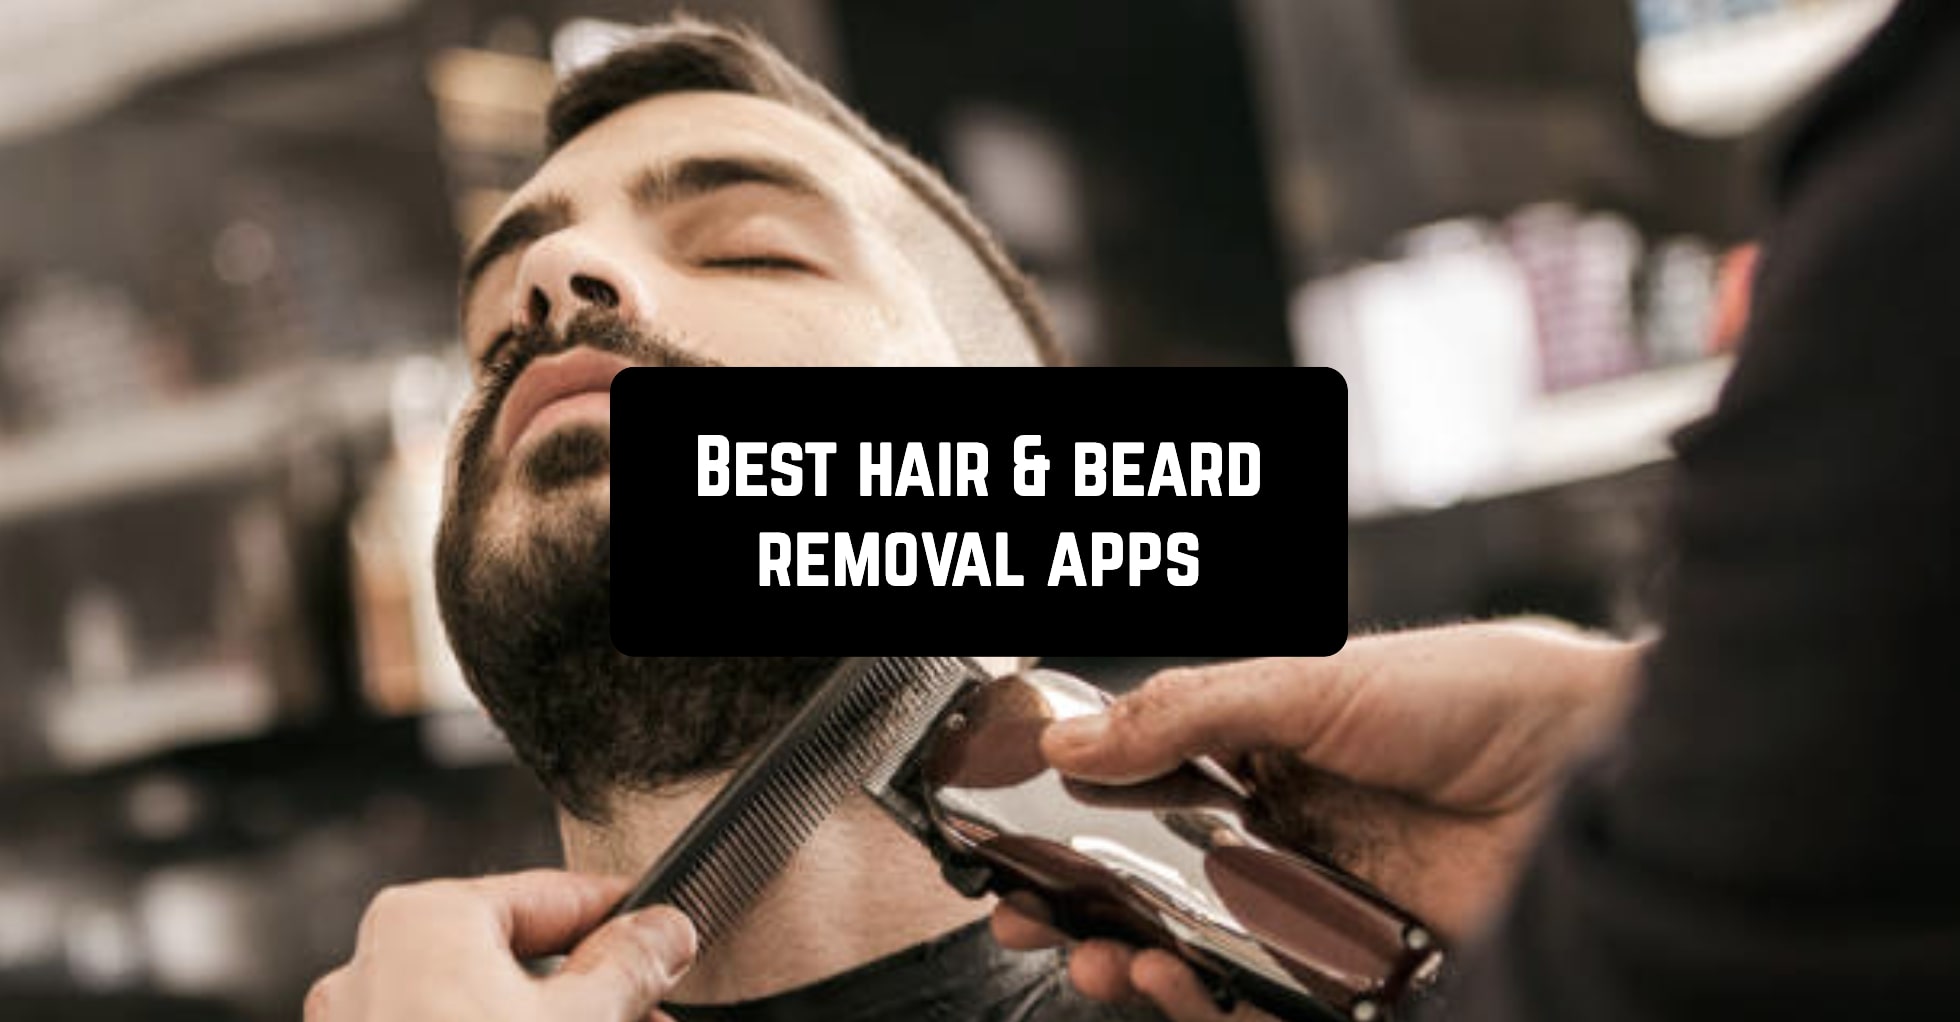 Best hair & beard removal apps